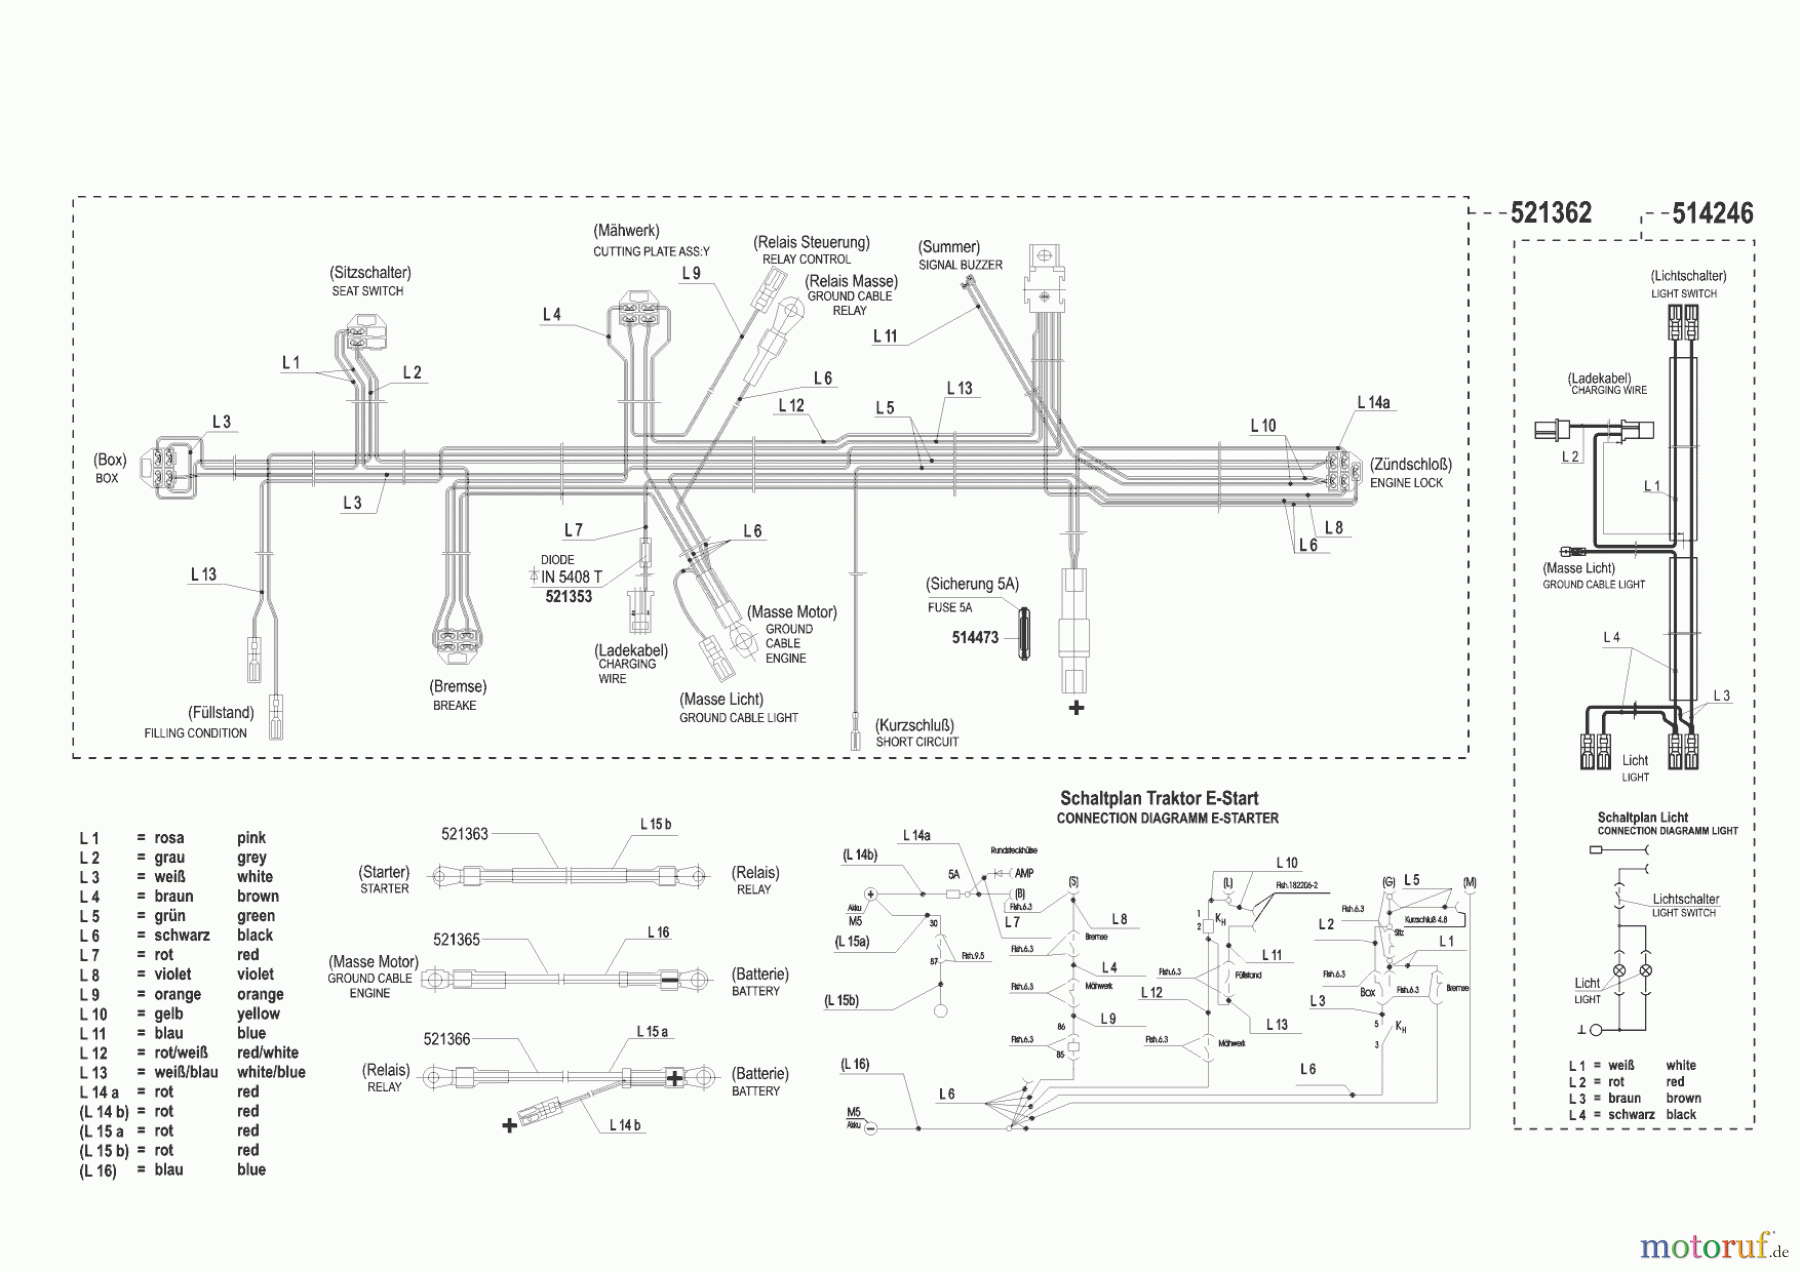  AL-KO Gartentechnik Rasentraktor T 850 vor 02/2002 Seite 8